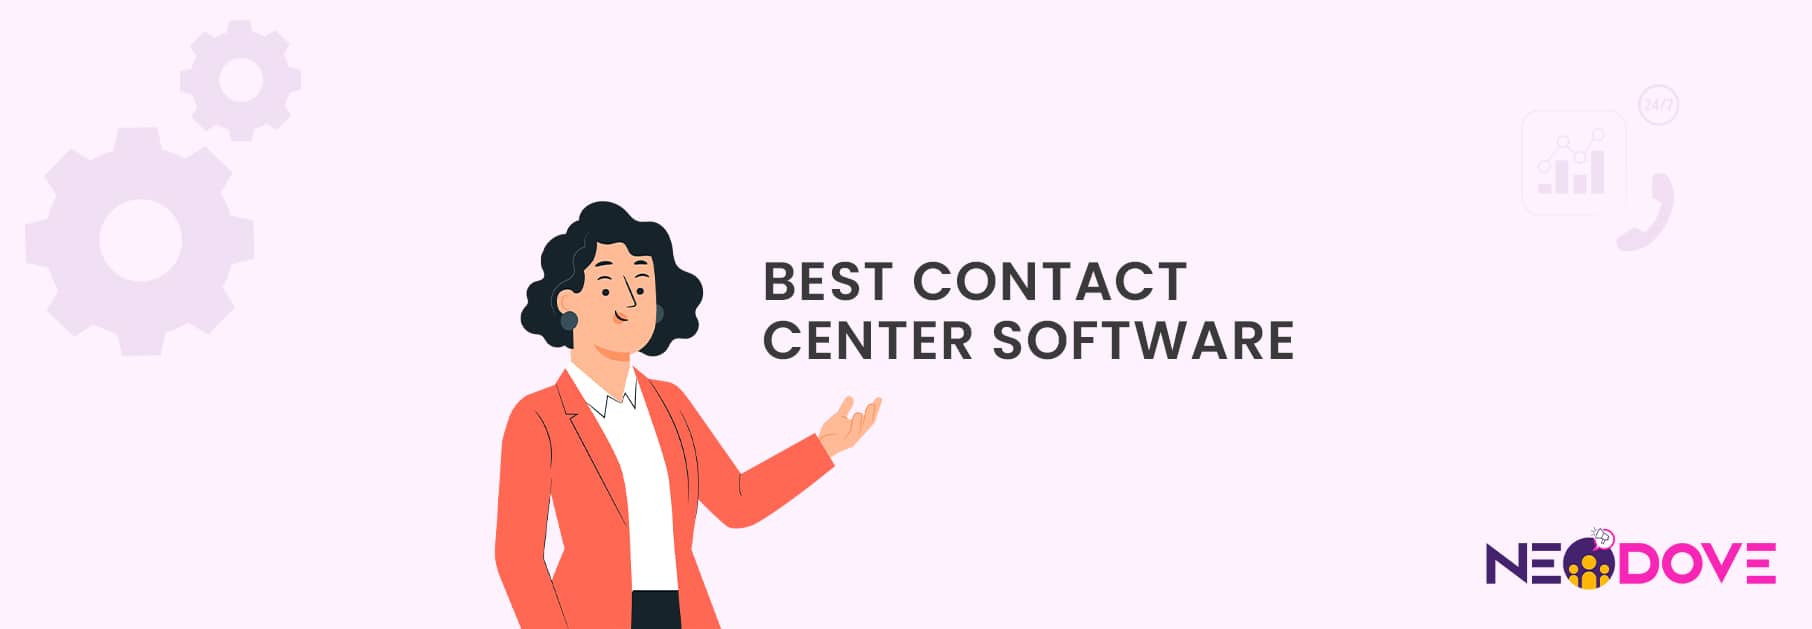 Contact center software